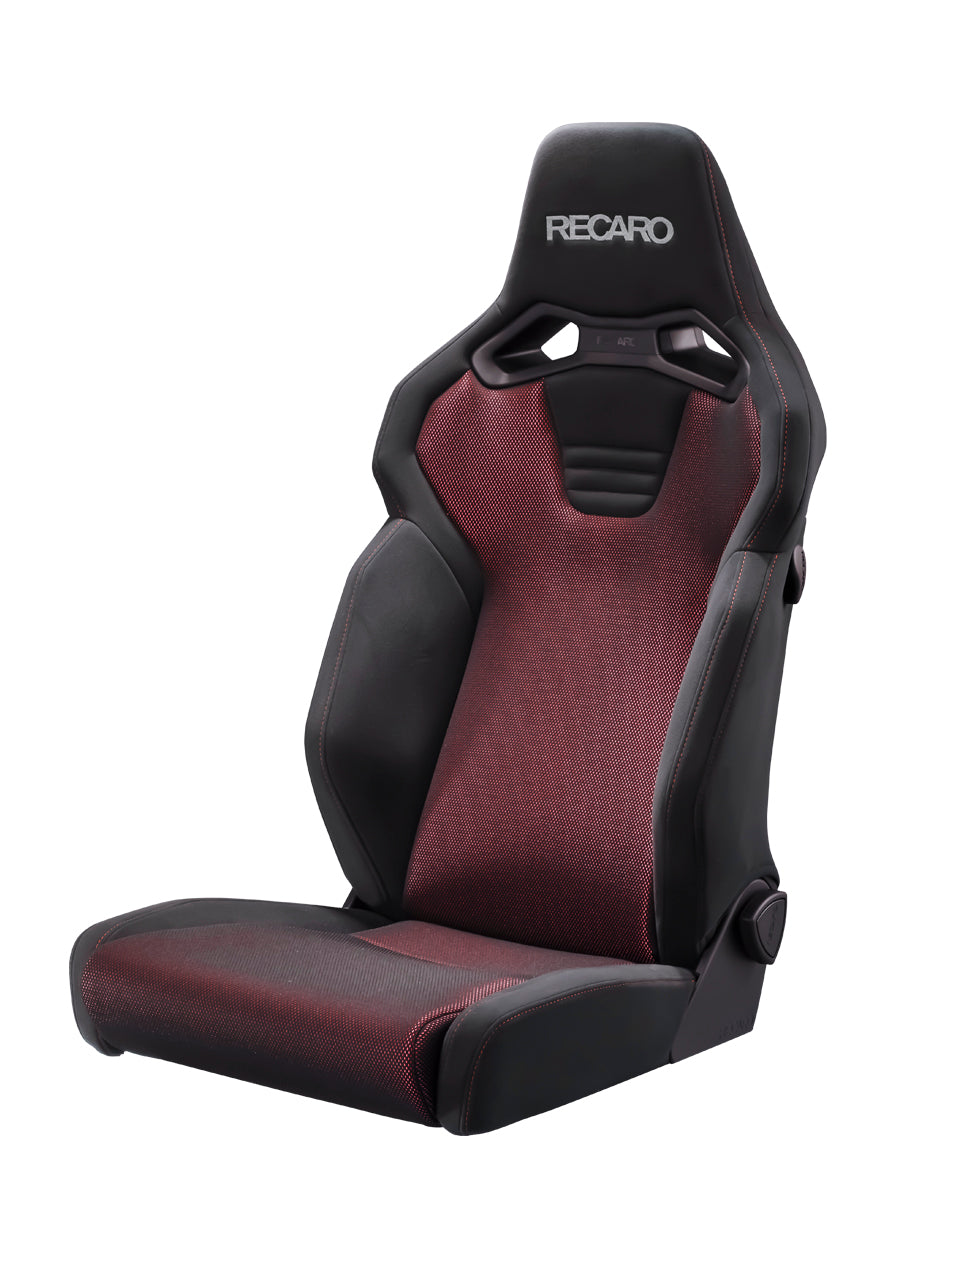 RECARO SR-C BK100 RD BK BRILLIANT MESH RED AND KAMUI BLACK COLOR SEAT FOR  81-121.20.641-0